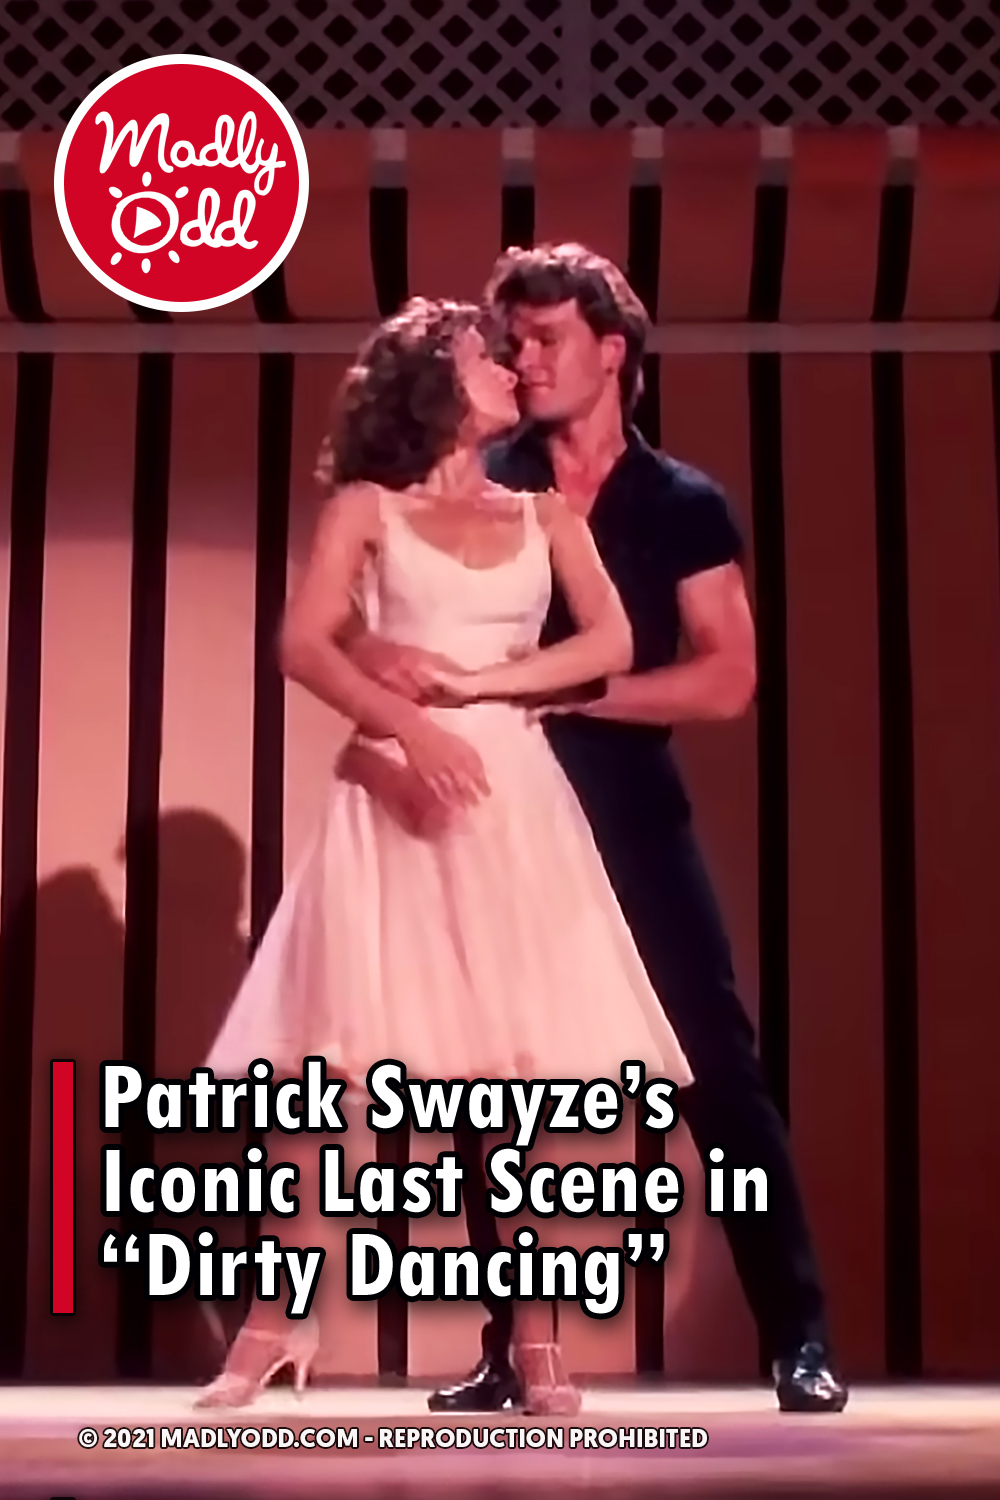 Patrick Swayze’s Iconic Last Scene in “Dirty Dancing”